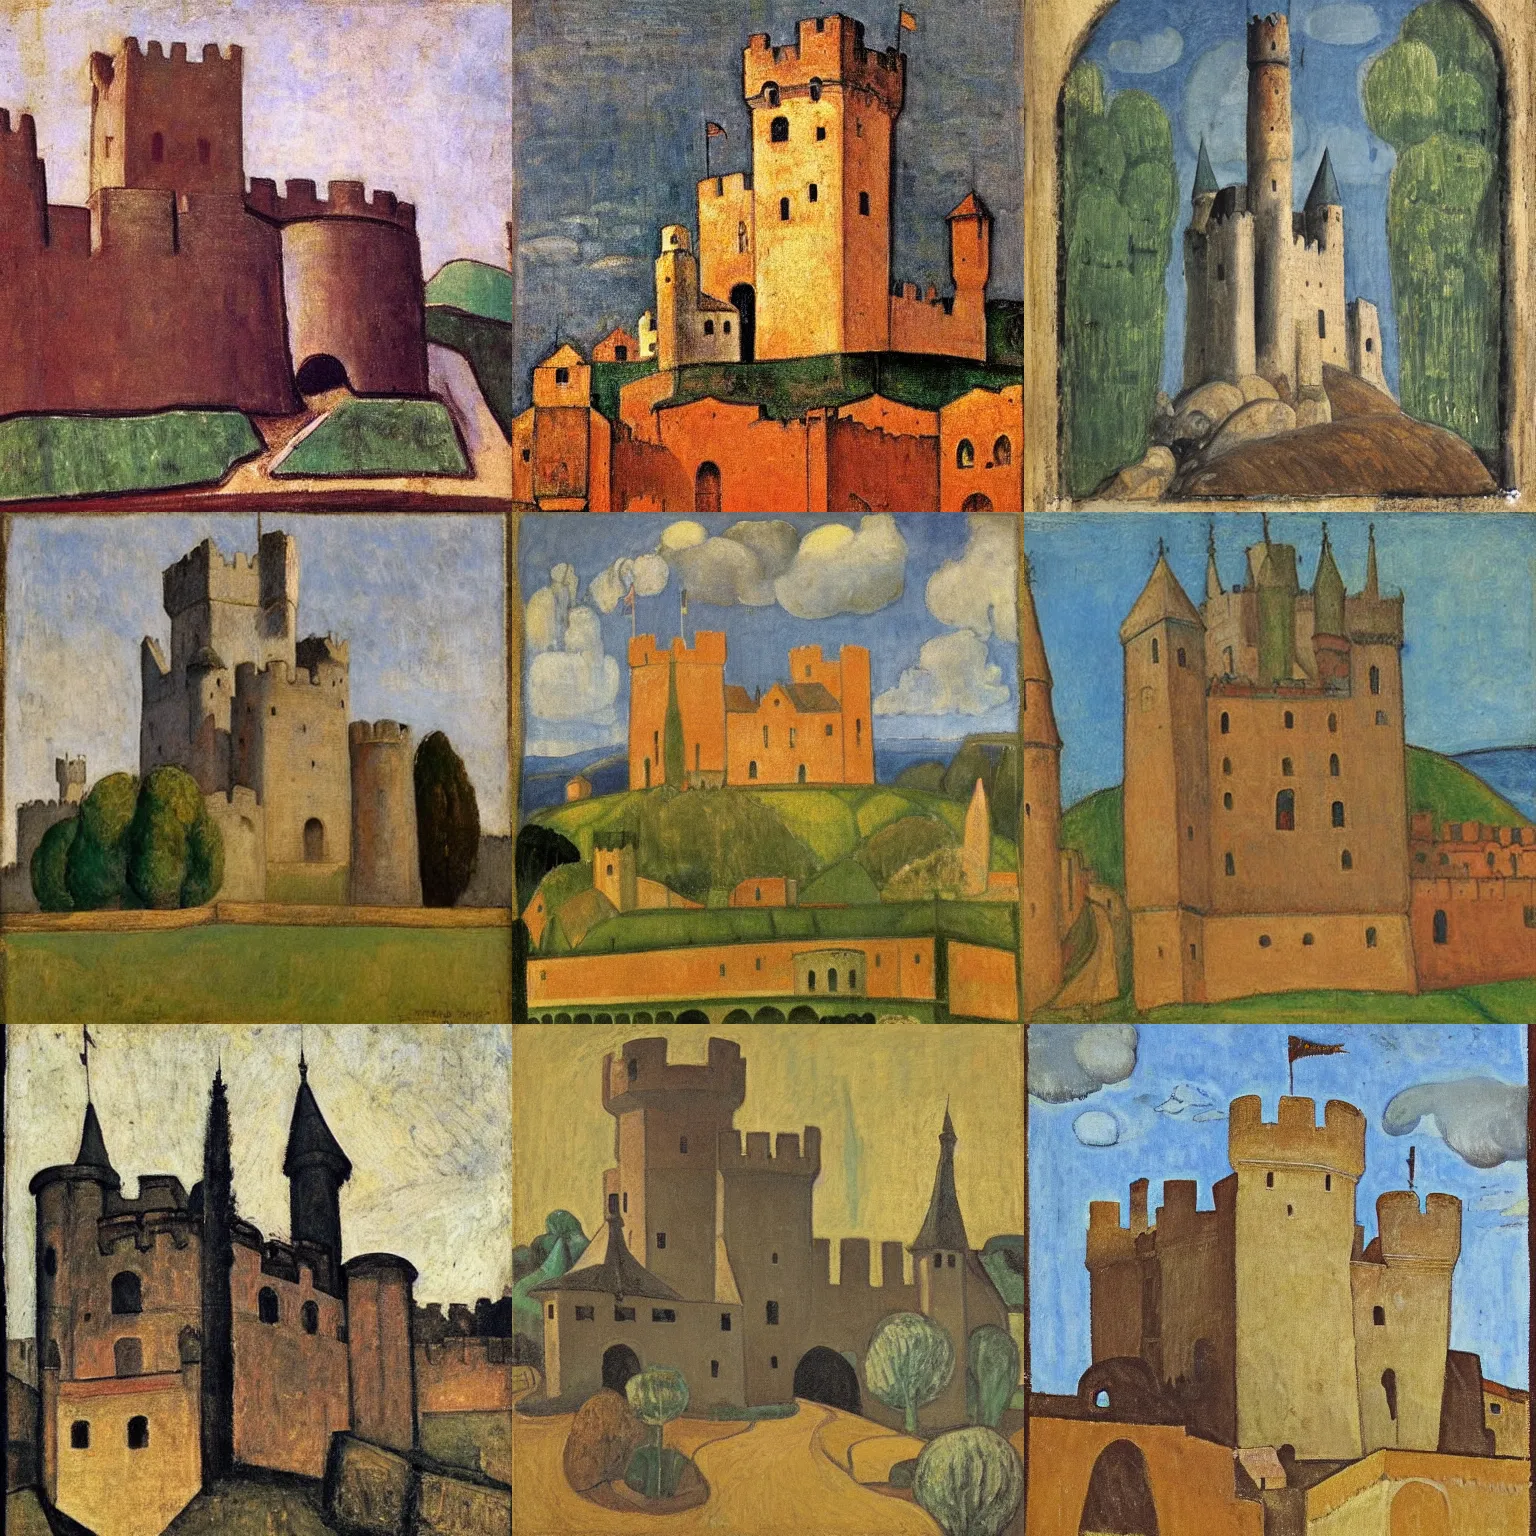 Prompt: medieval castle, by paula modersohn - becker